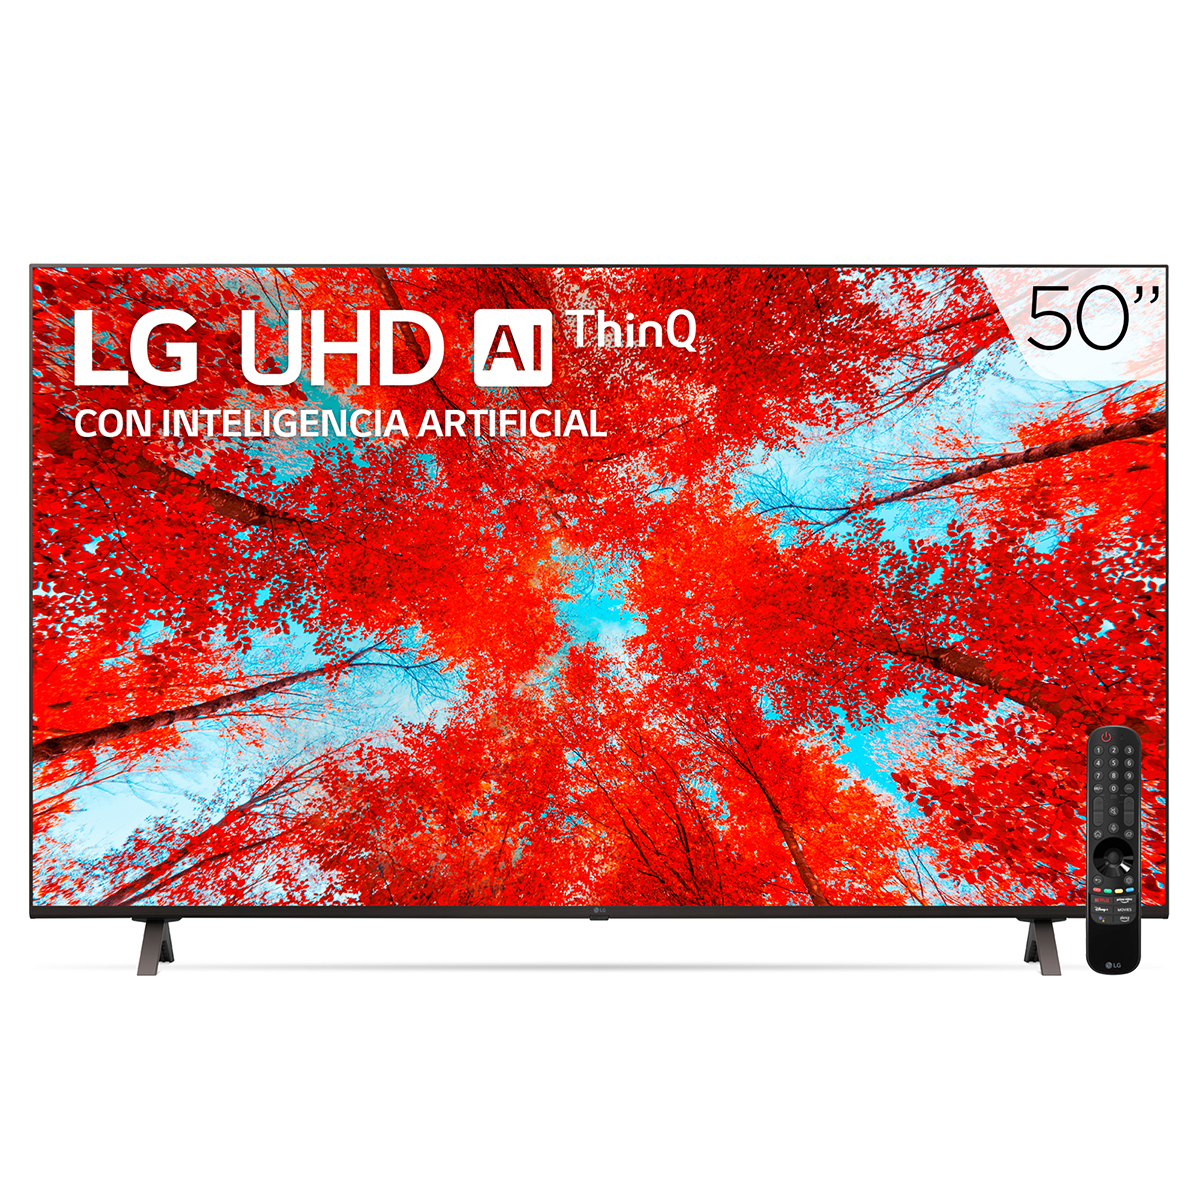 LG Pantalla LG OLED TV AI ThinQ 4K 55